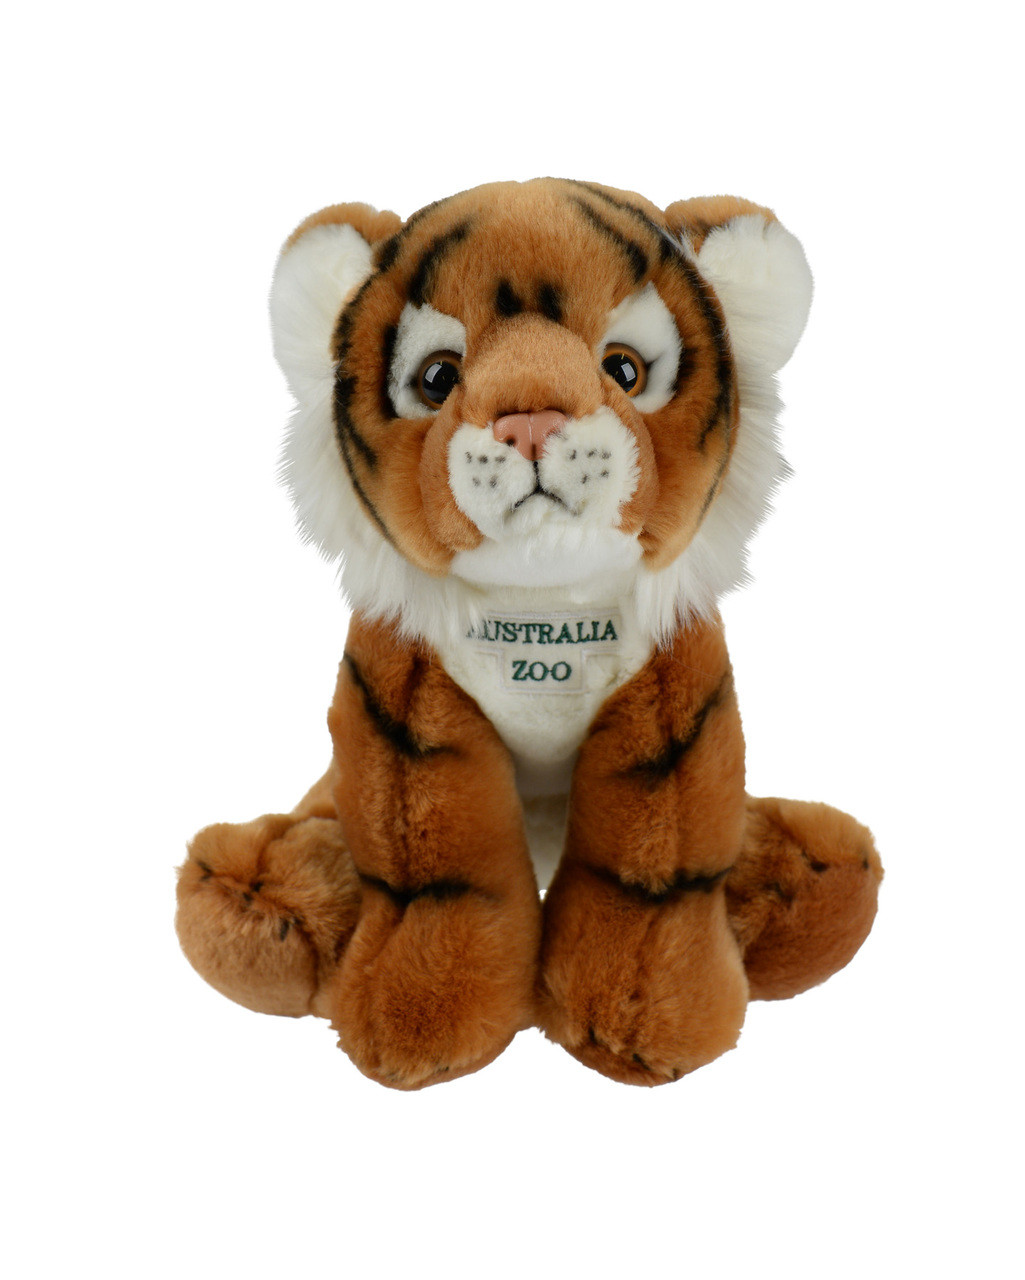 small tiger stuffed animal